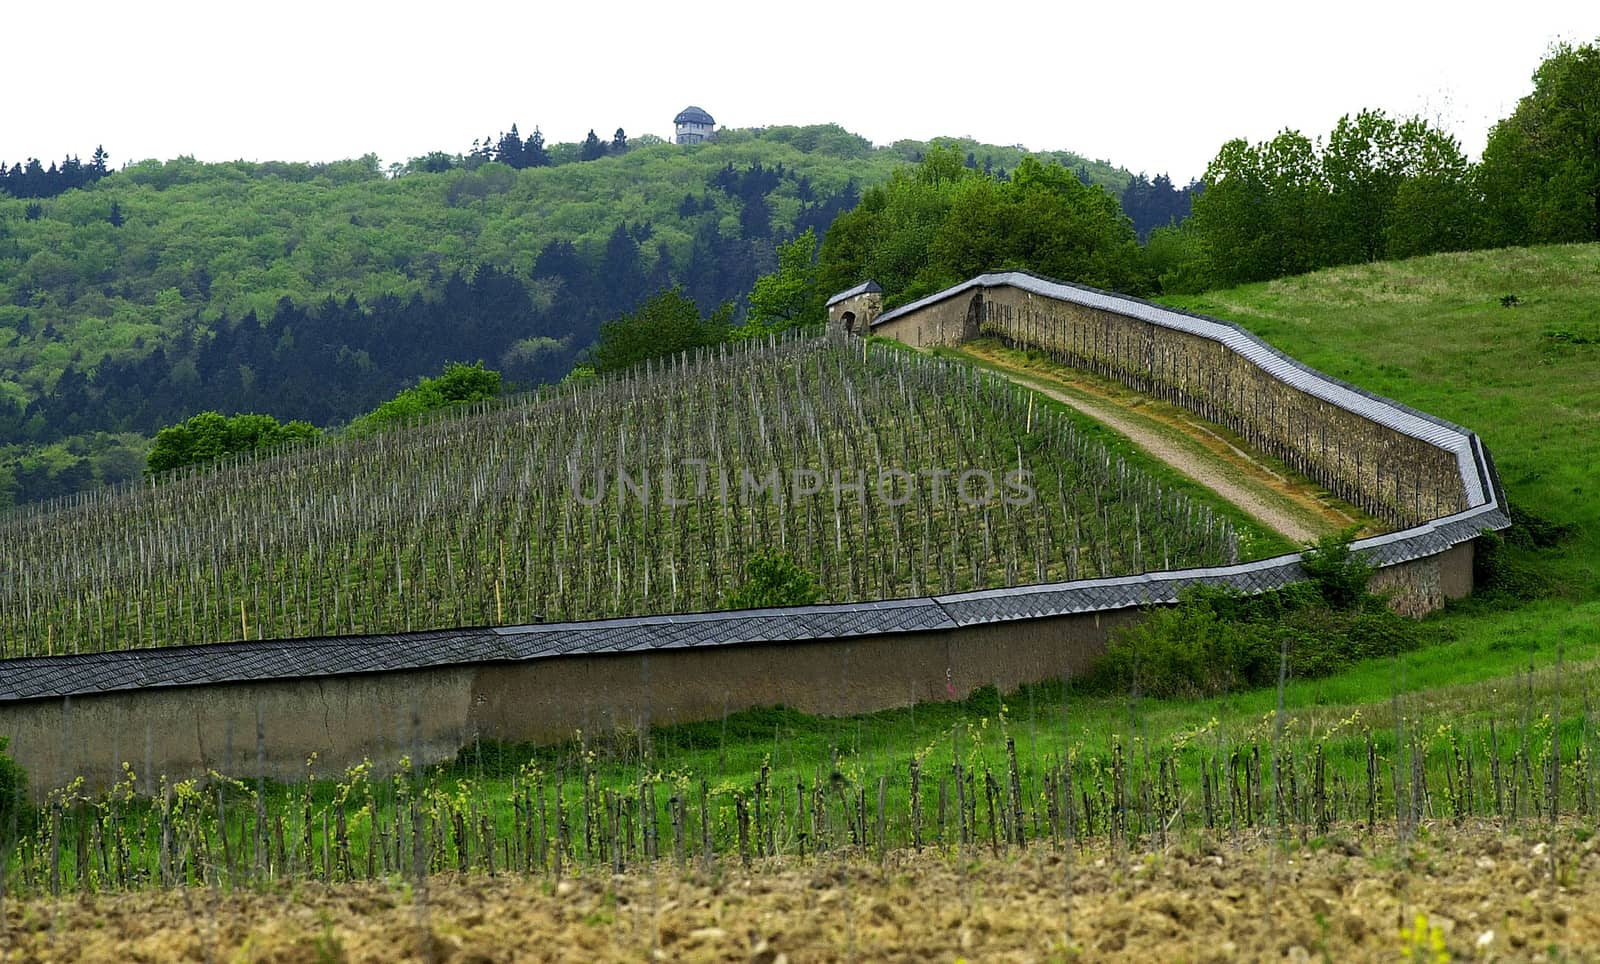 Panoramic views over vineyard